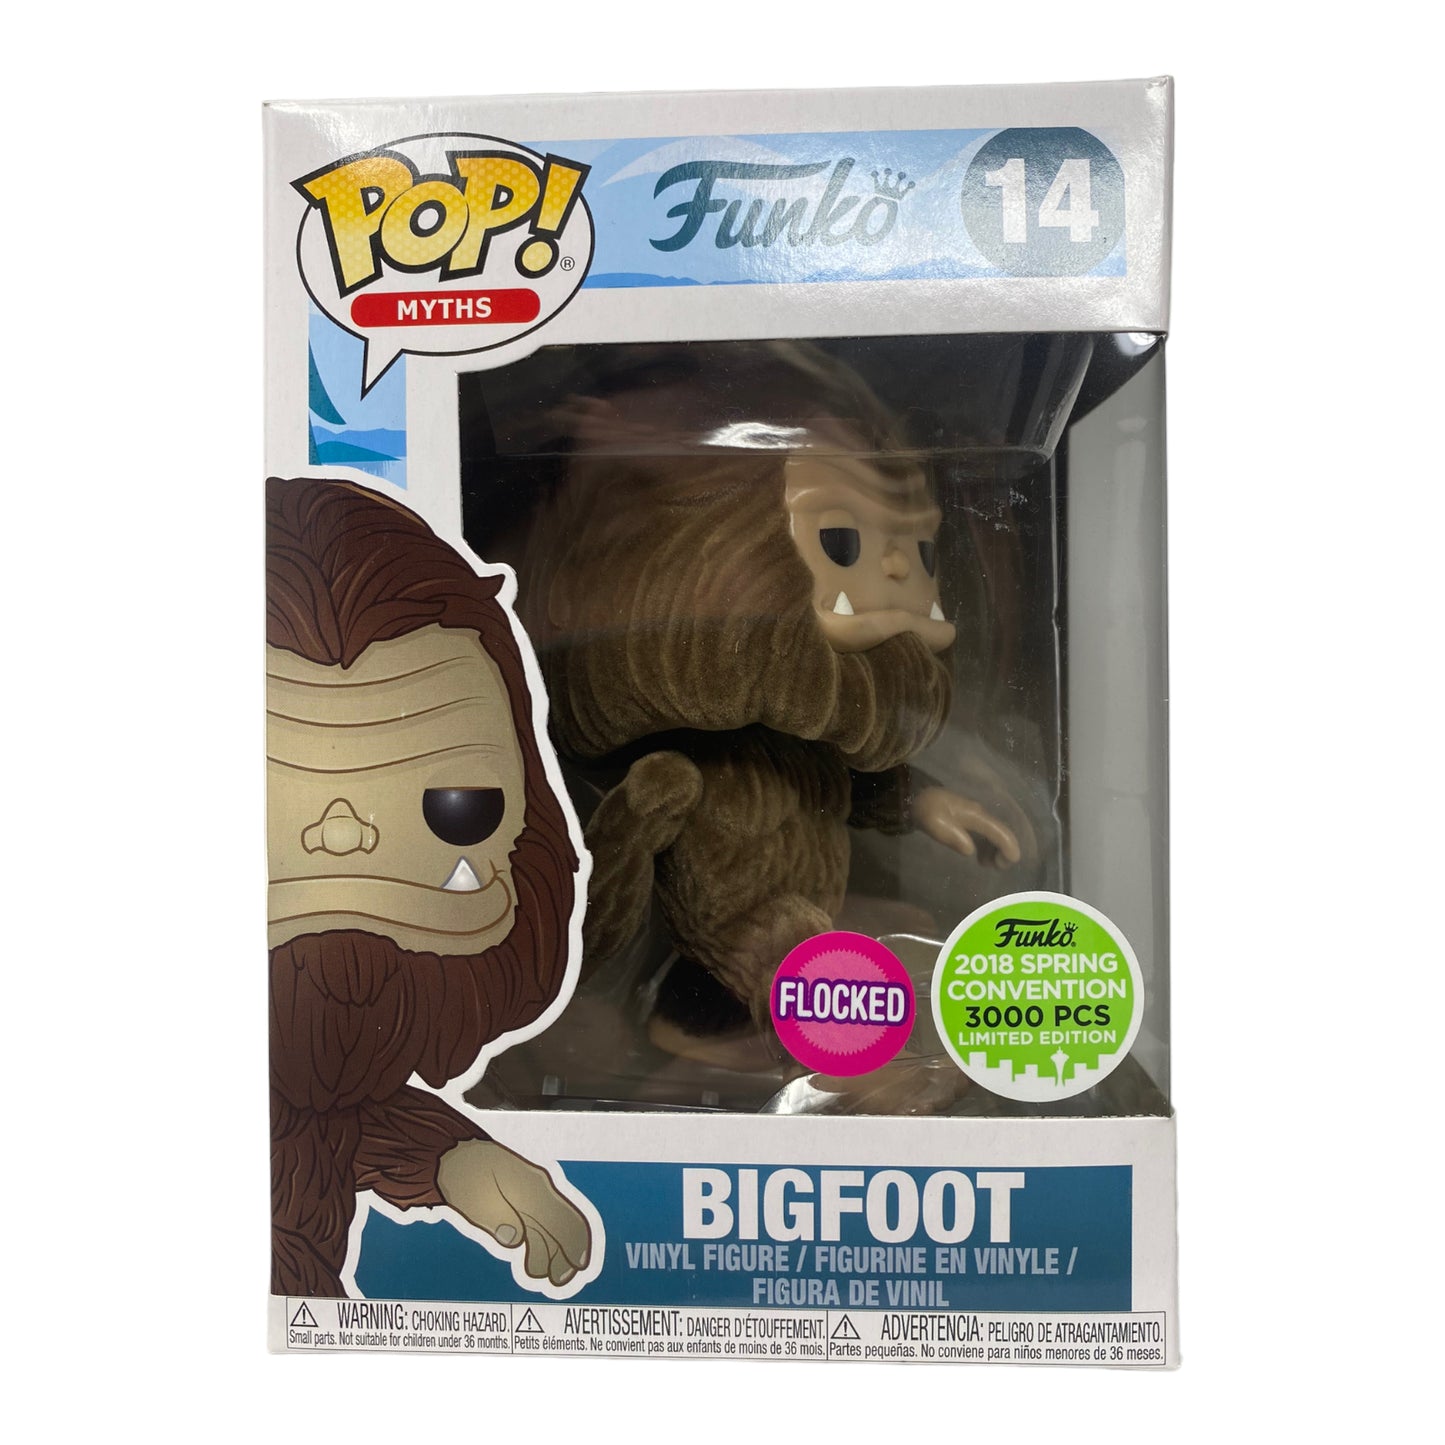 Sold - 2018 Myths - Bigfoot 14, Flocked Spring Convention, 3000 pcs